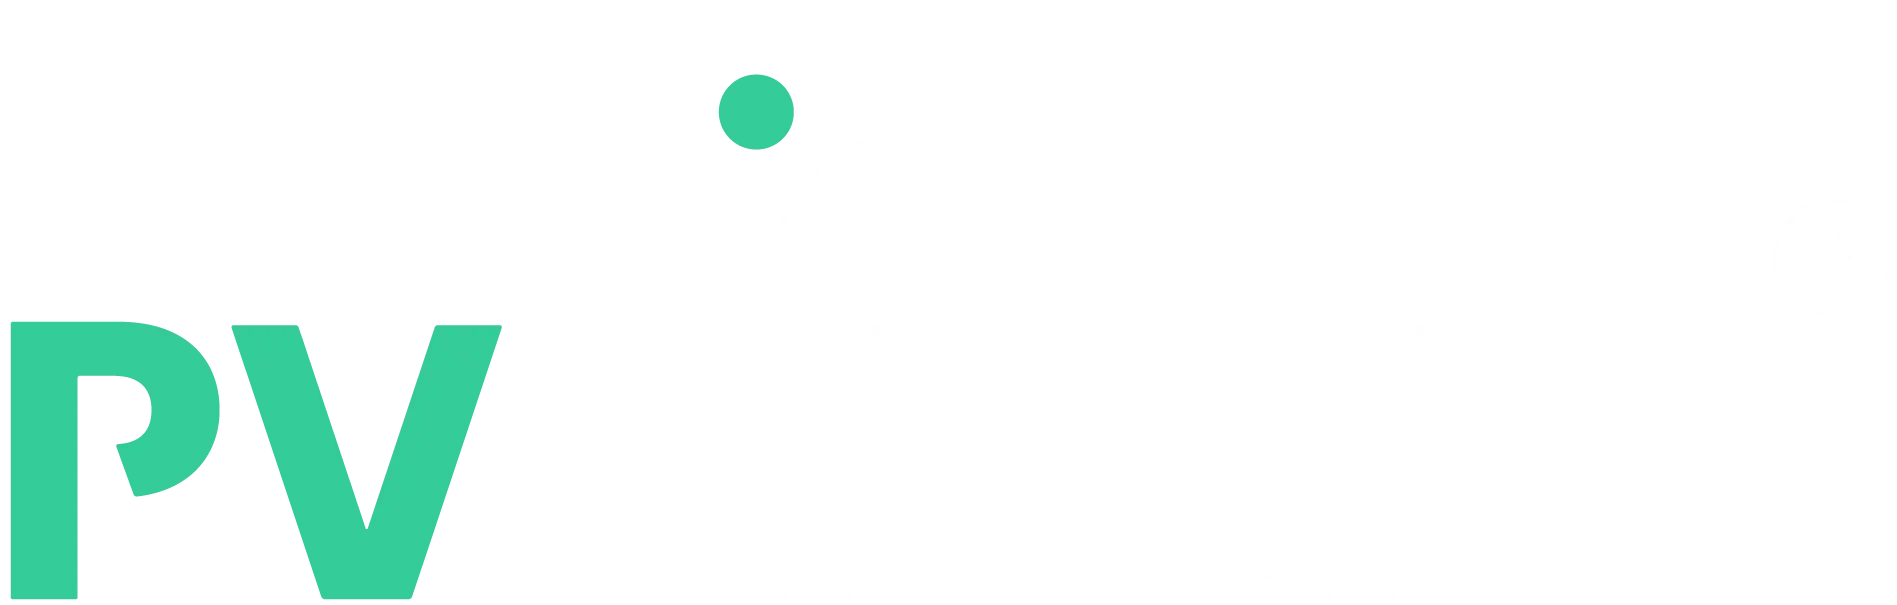 PVRADAR logo